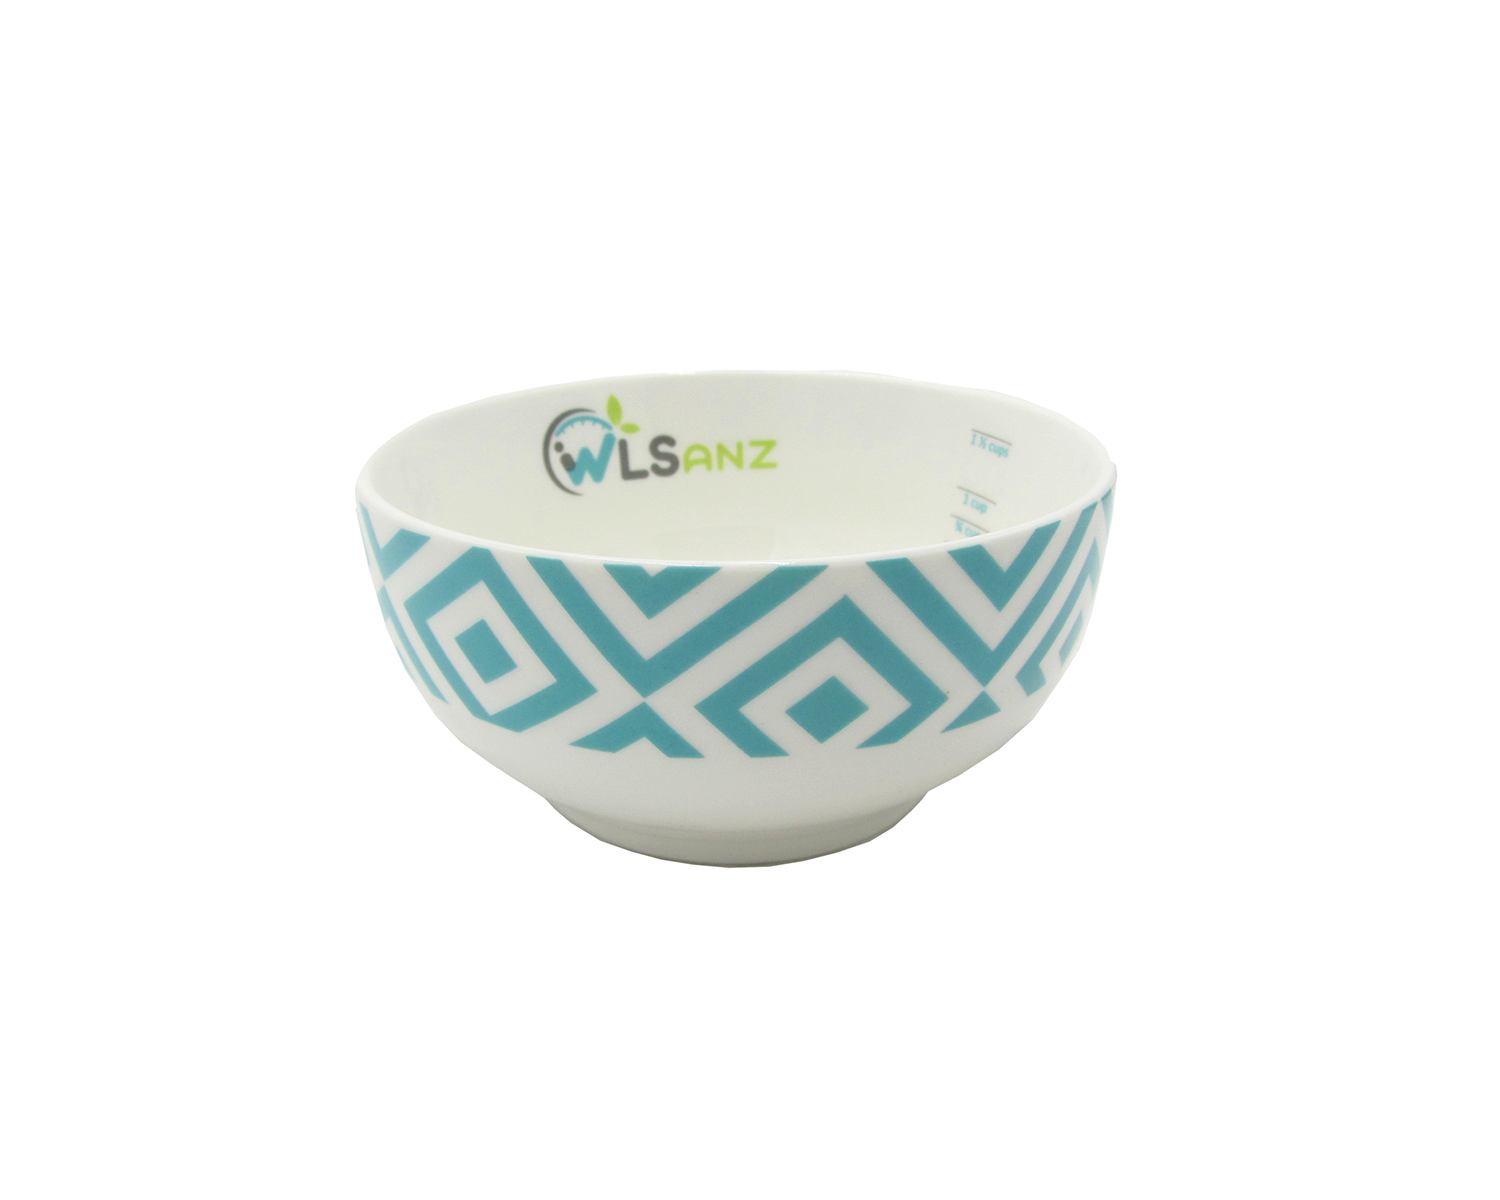 WLSANZ Porcelain Portion Control Bowl side view